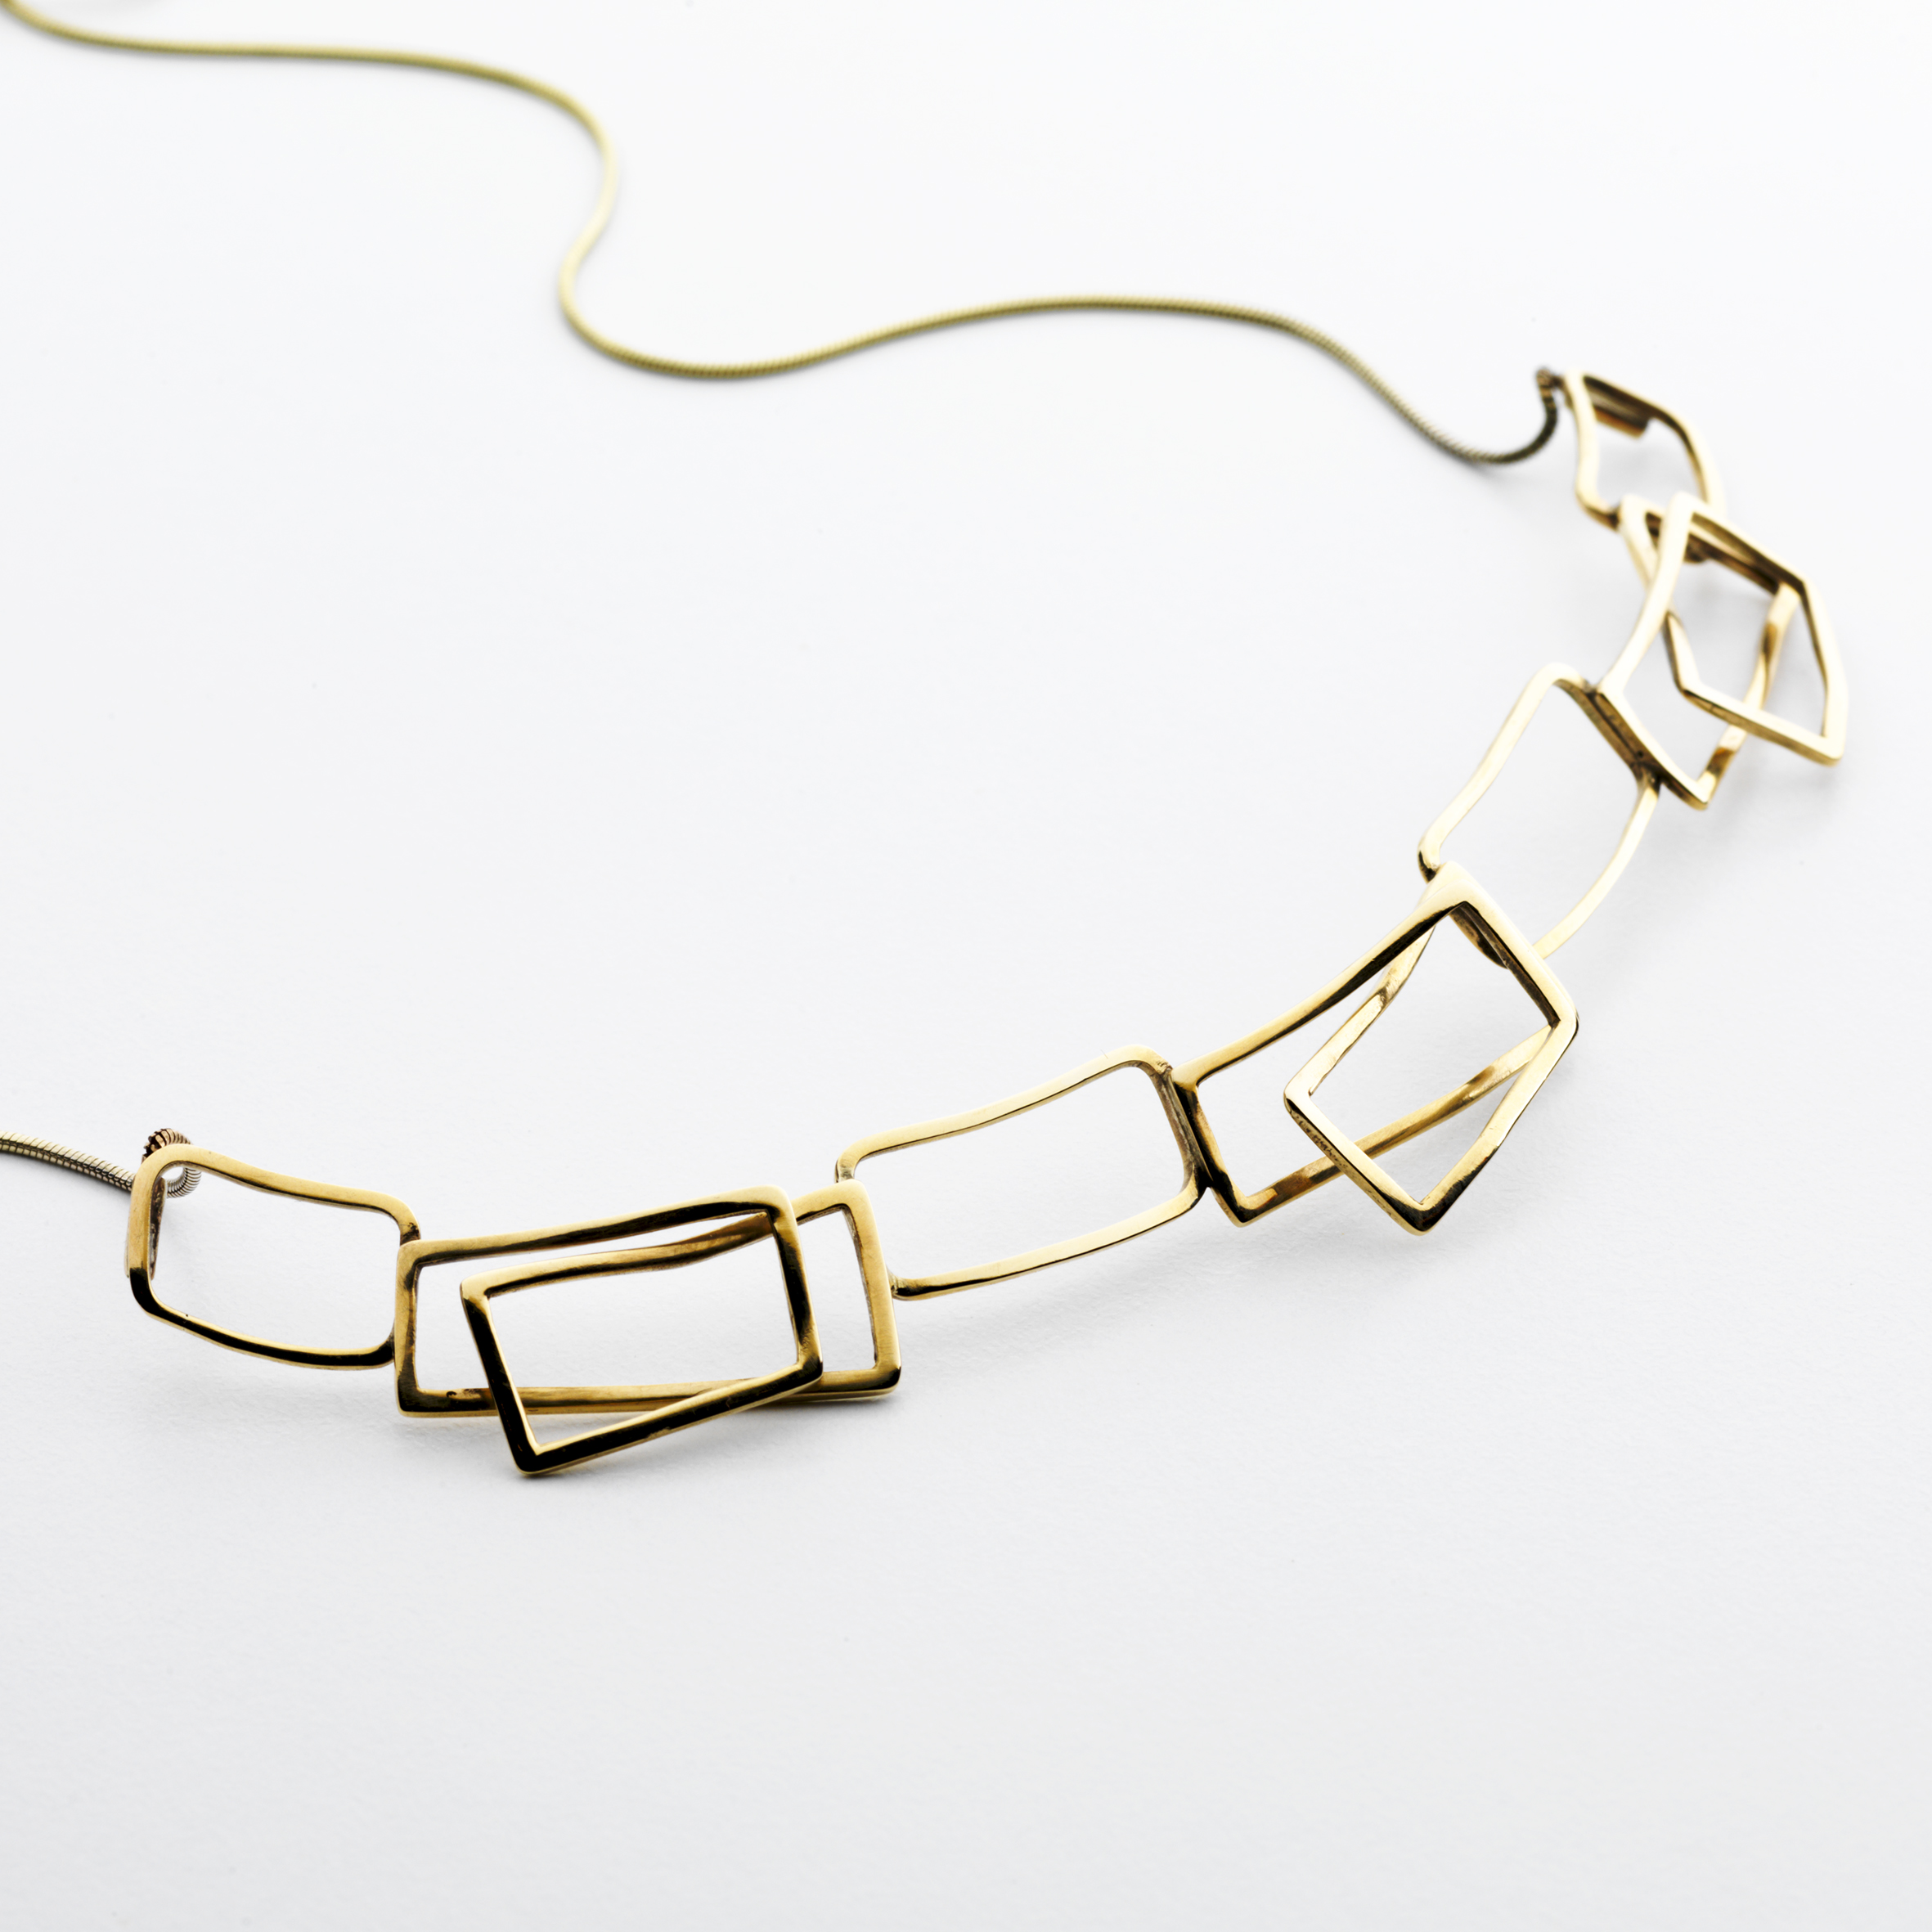 https://www.gennadelaney.com/wp-content/uploads/2018/10/Bespoke-Jewellery-Elegant-Gold-Necklace.jpg